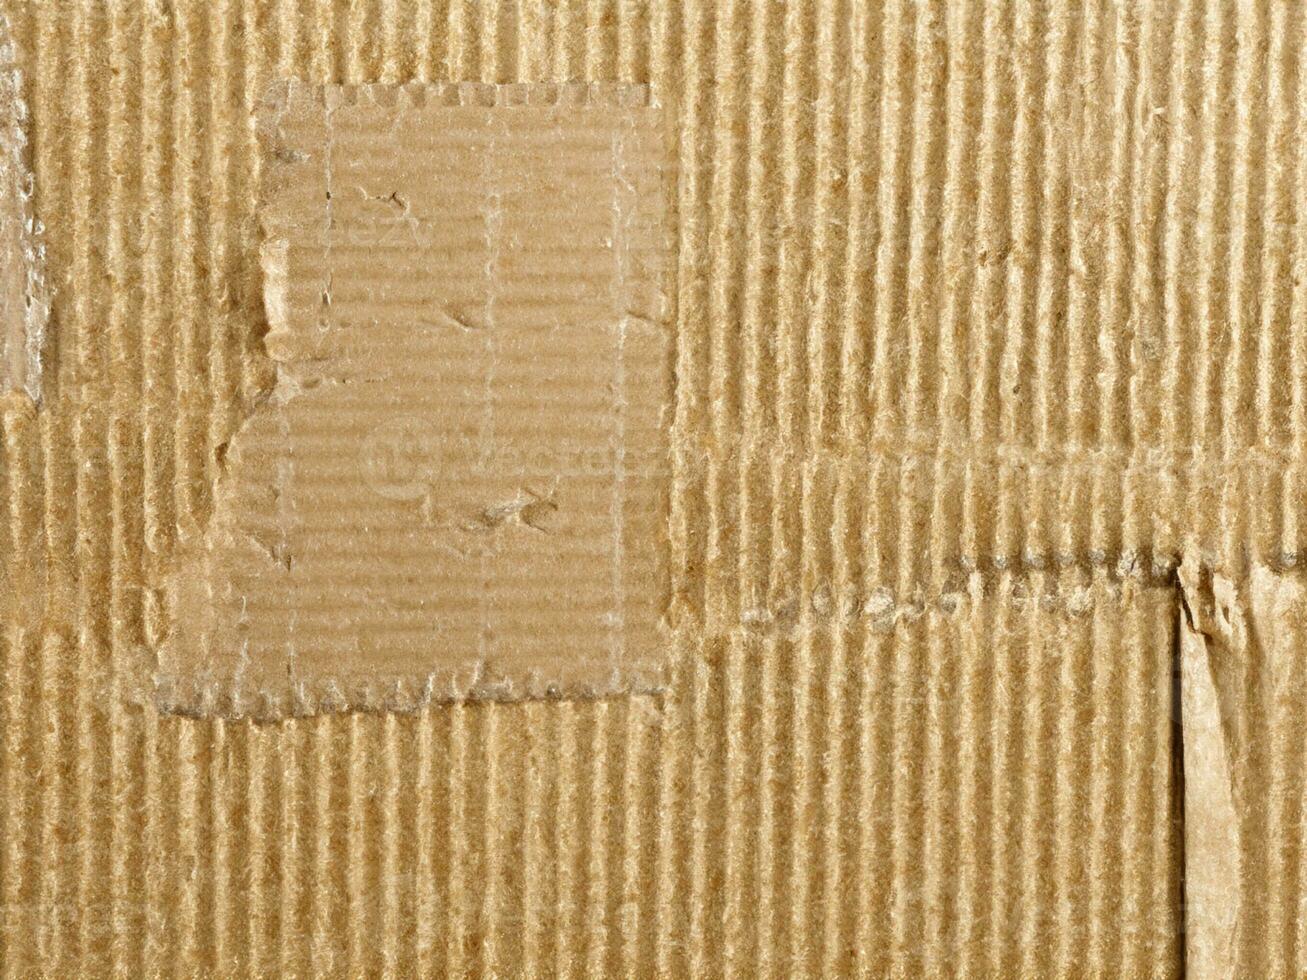 brown cardboard box texture background photo